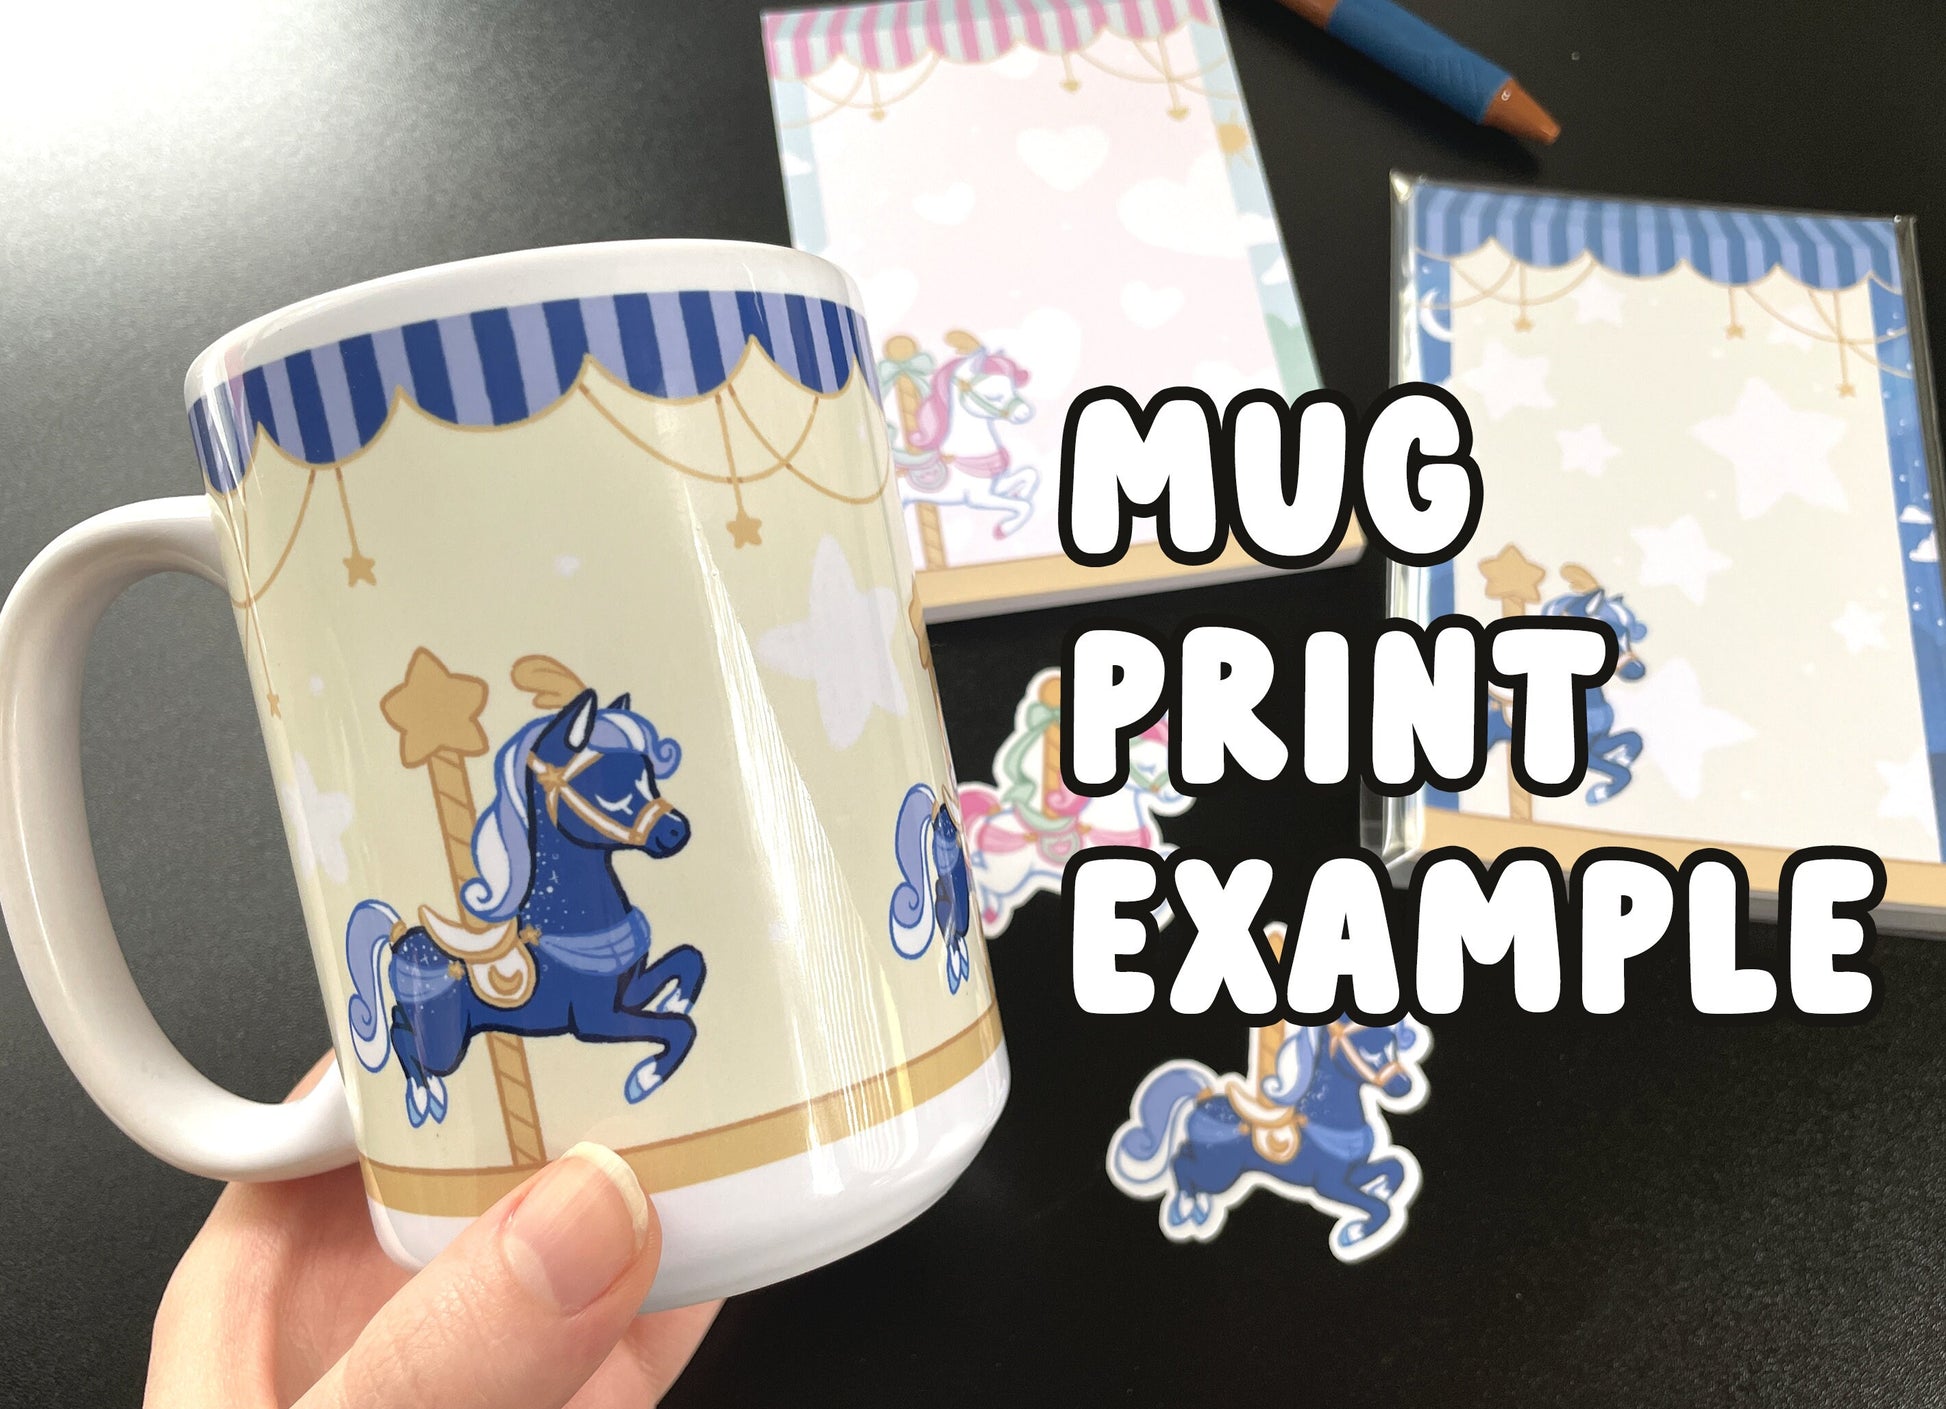 Axolotl Mug / hand drawn art coffee cup, whole lotl love mug